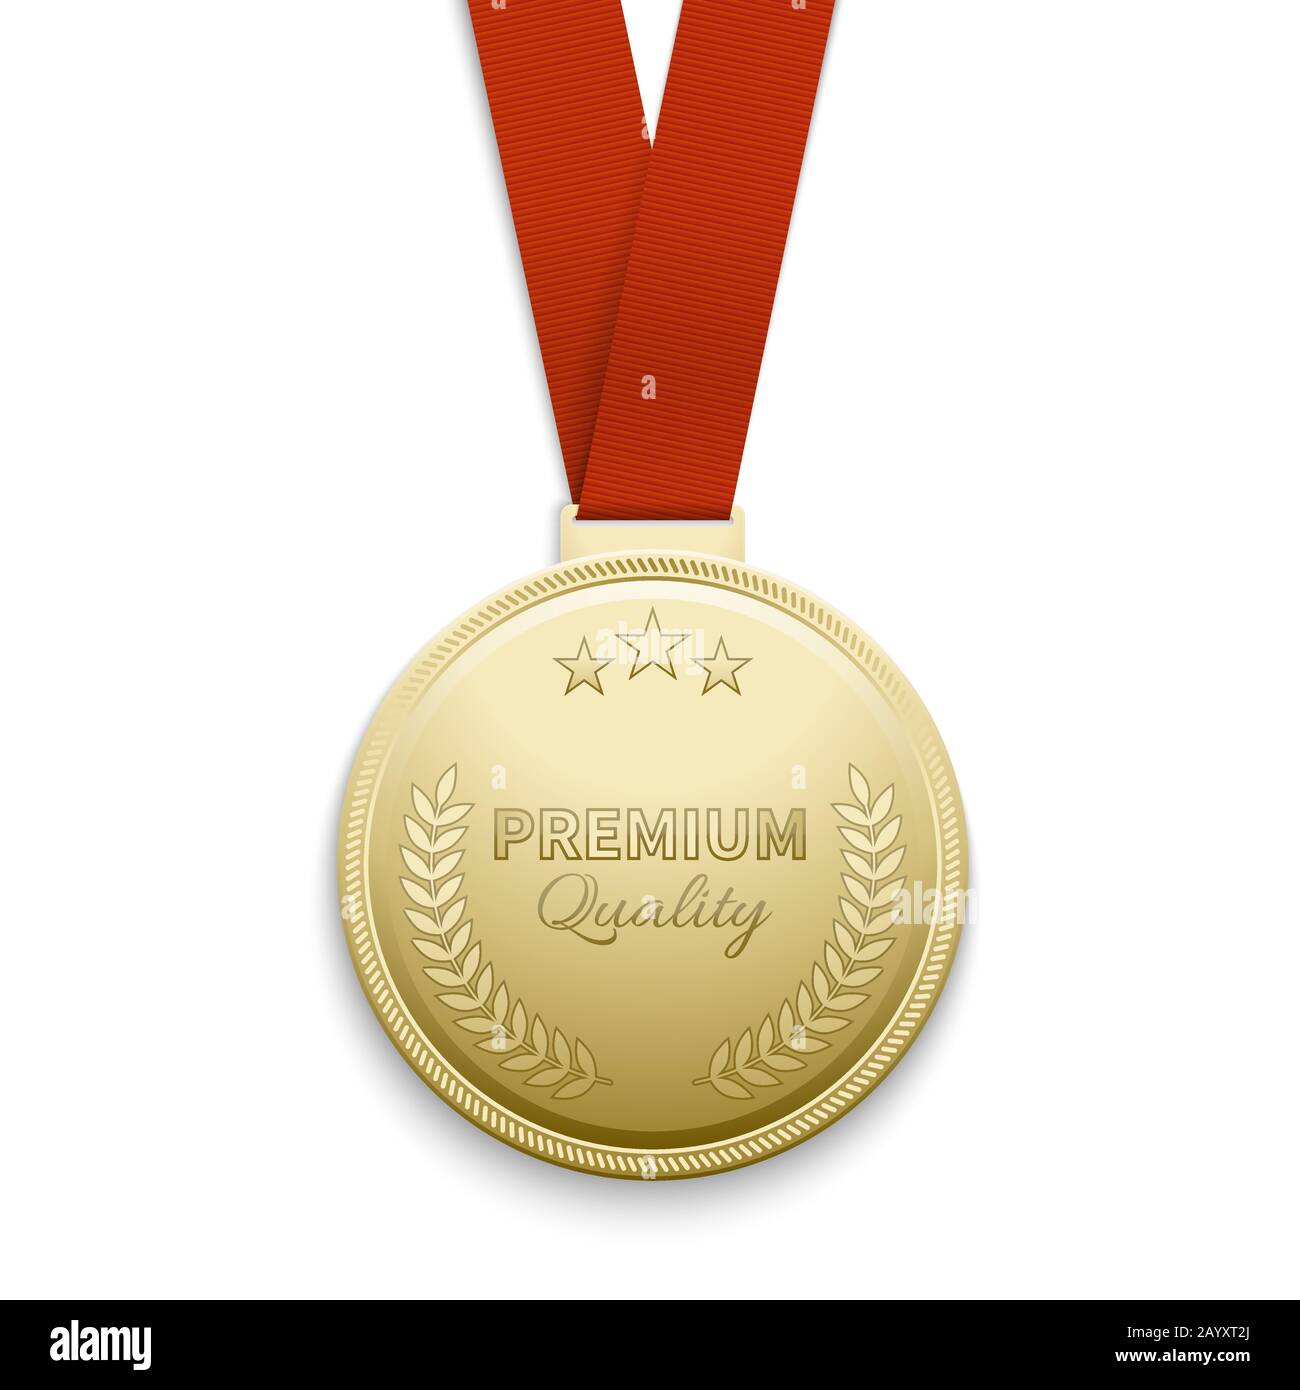 Premium quality gold medal vector illustration. Medal of premium quality and golden medal emblem Stock Vector